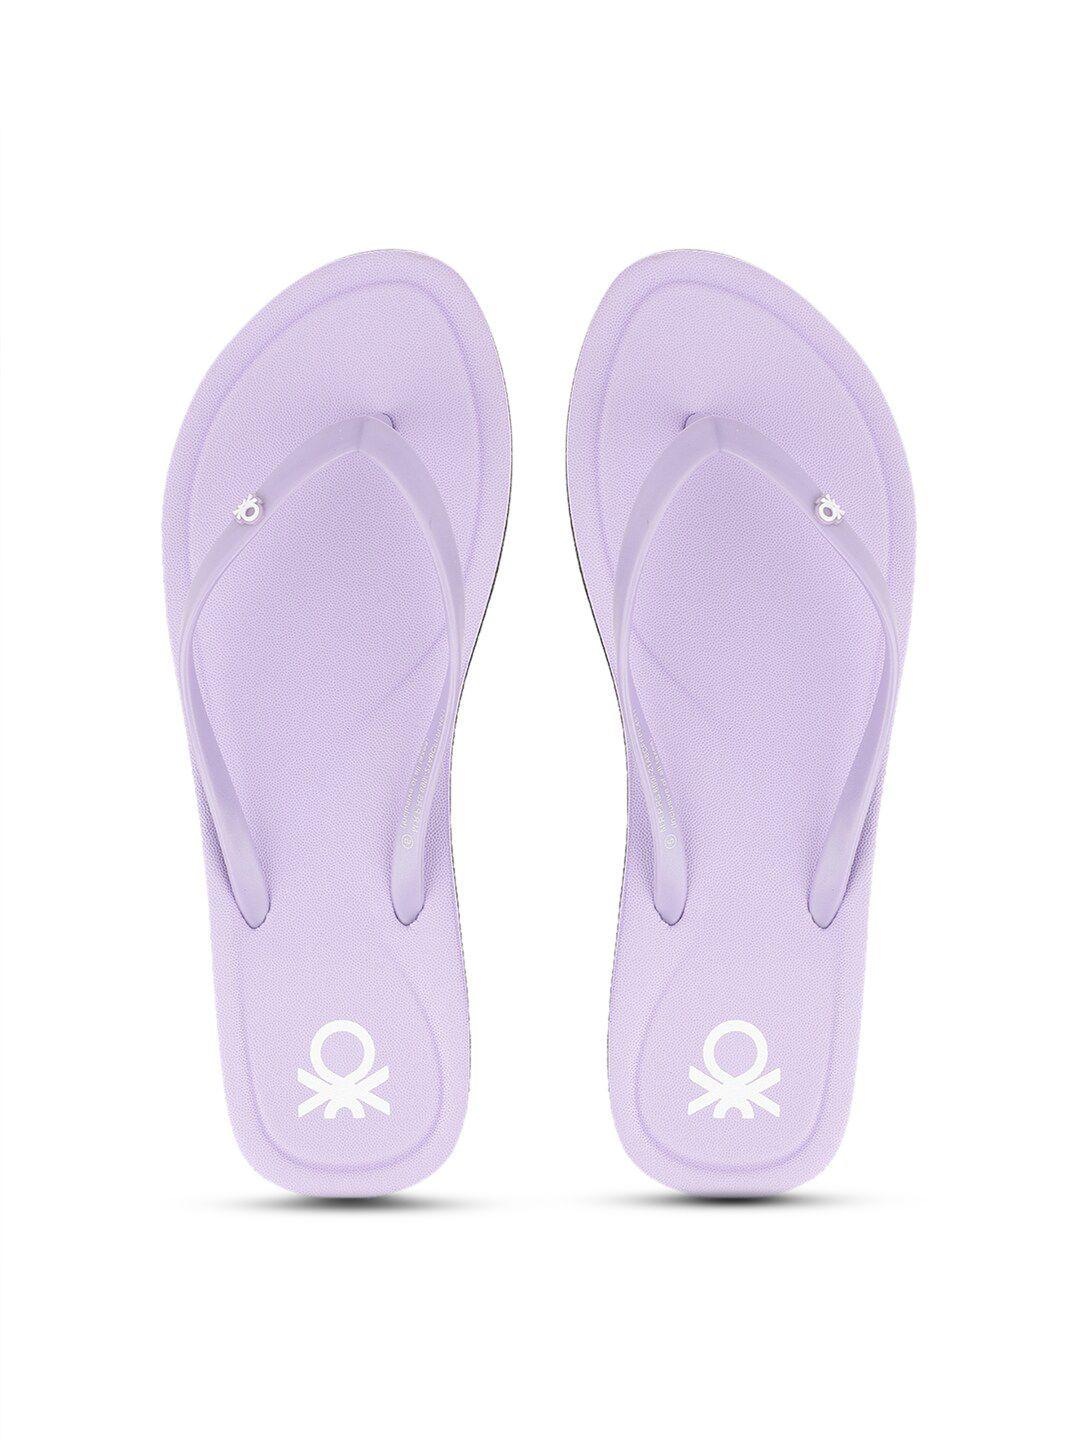 united colors of benetton women solid purple flip flops